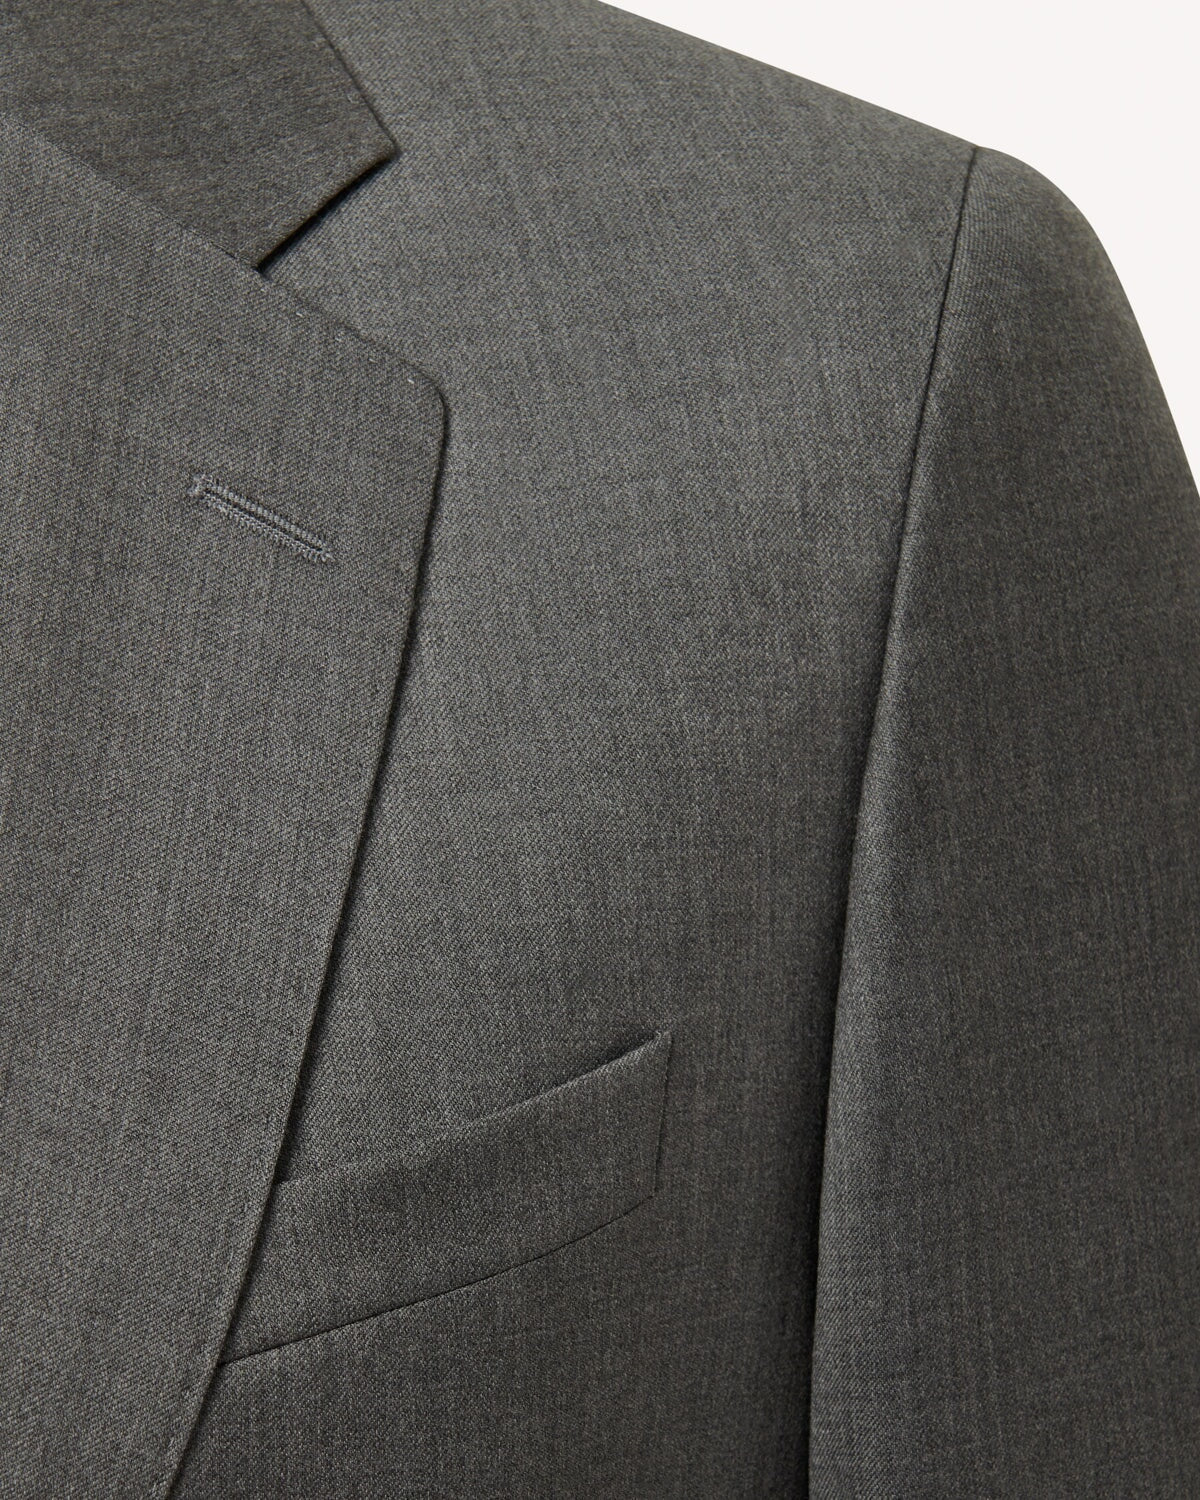 Kilgour Savile Row Tailoring SB1 KG Single Breasted Dark Grey Suit